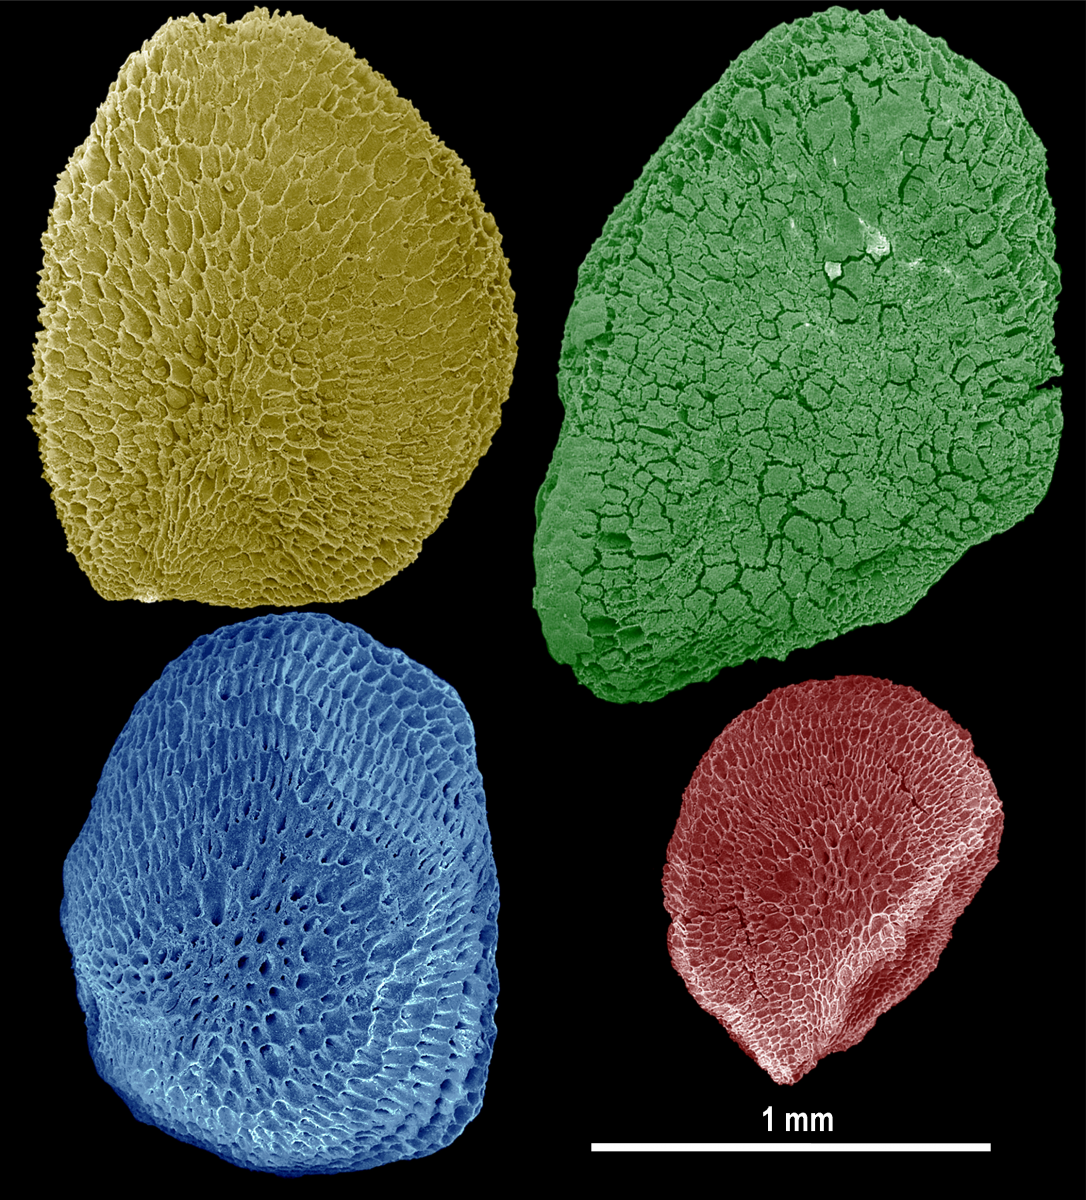 Imagens por microscopia de varrimento das sementes de Eurya stigmosa